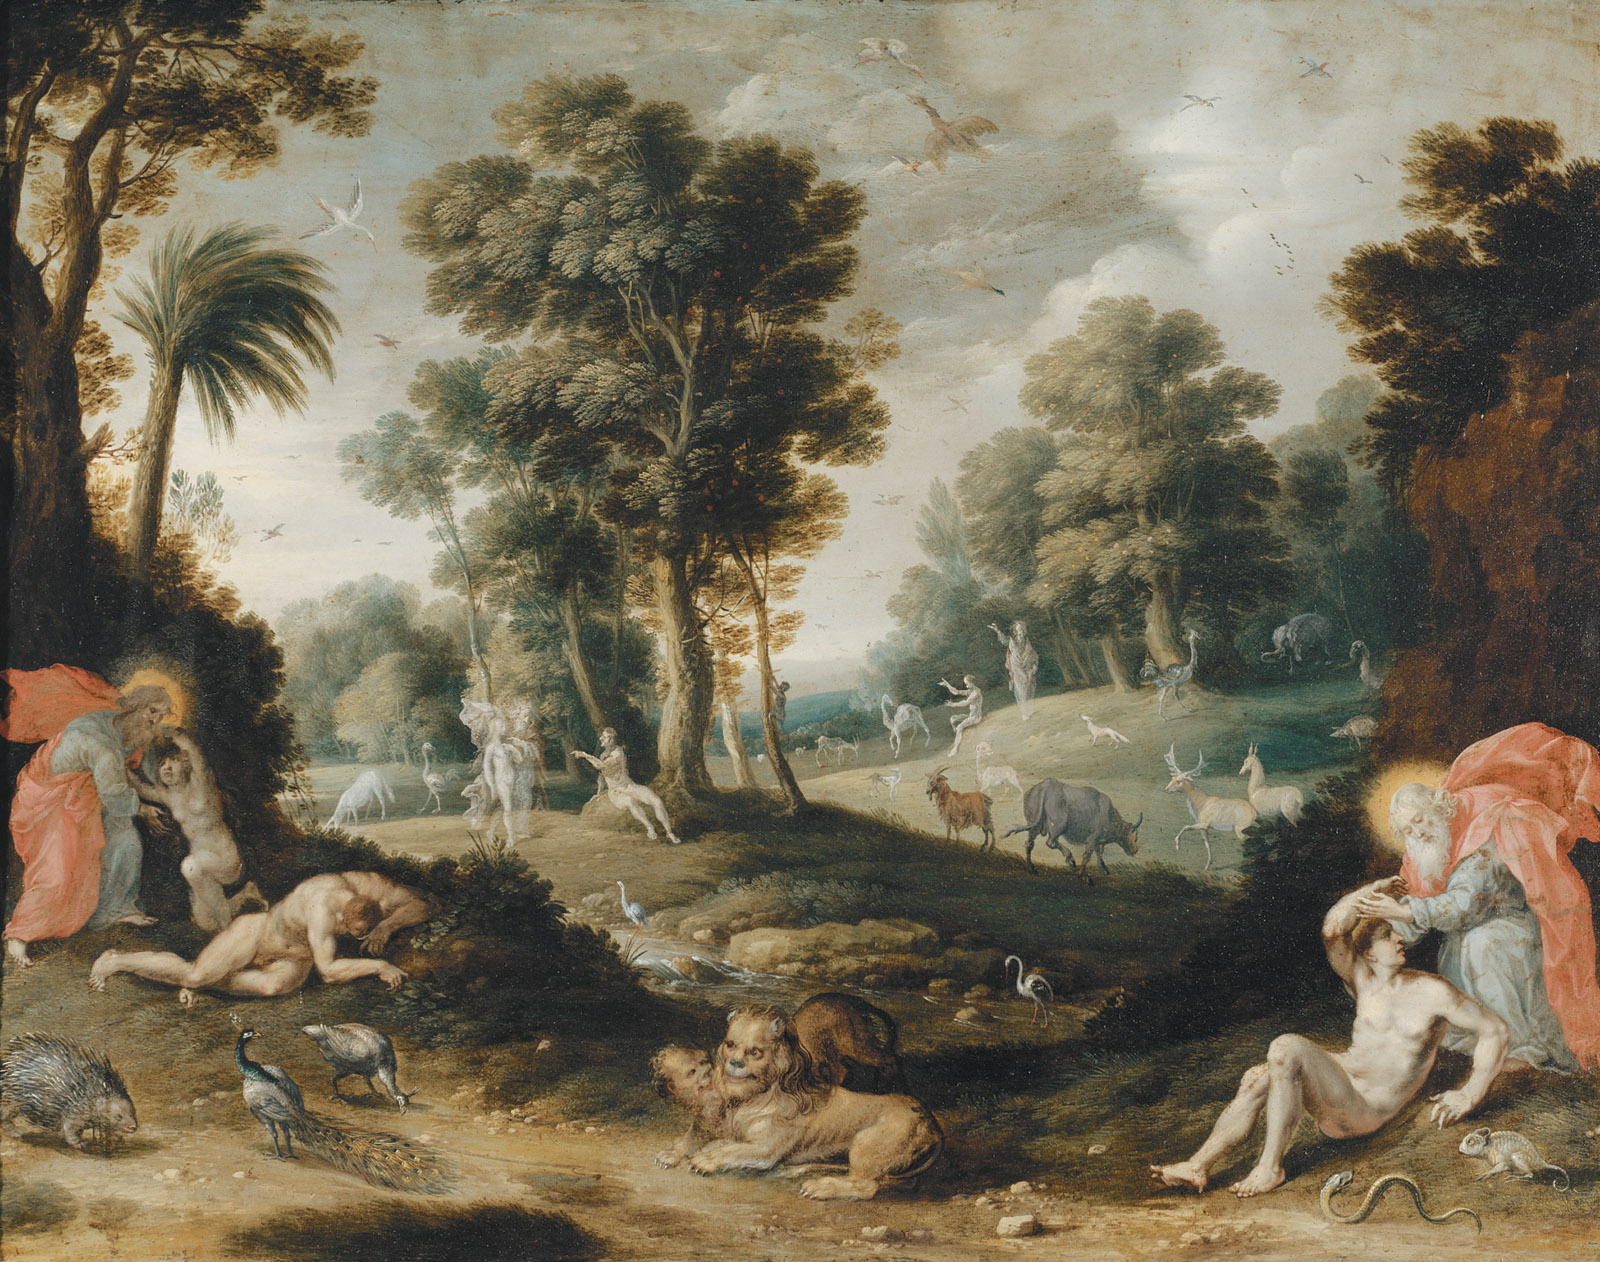 ‘The Creation of Adam and Eve’; Flemish school, seventeenth century